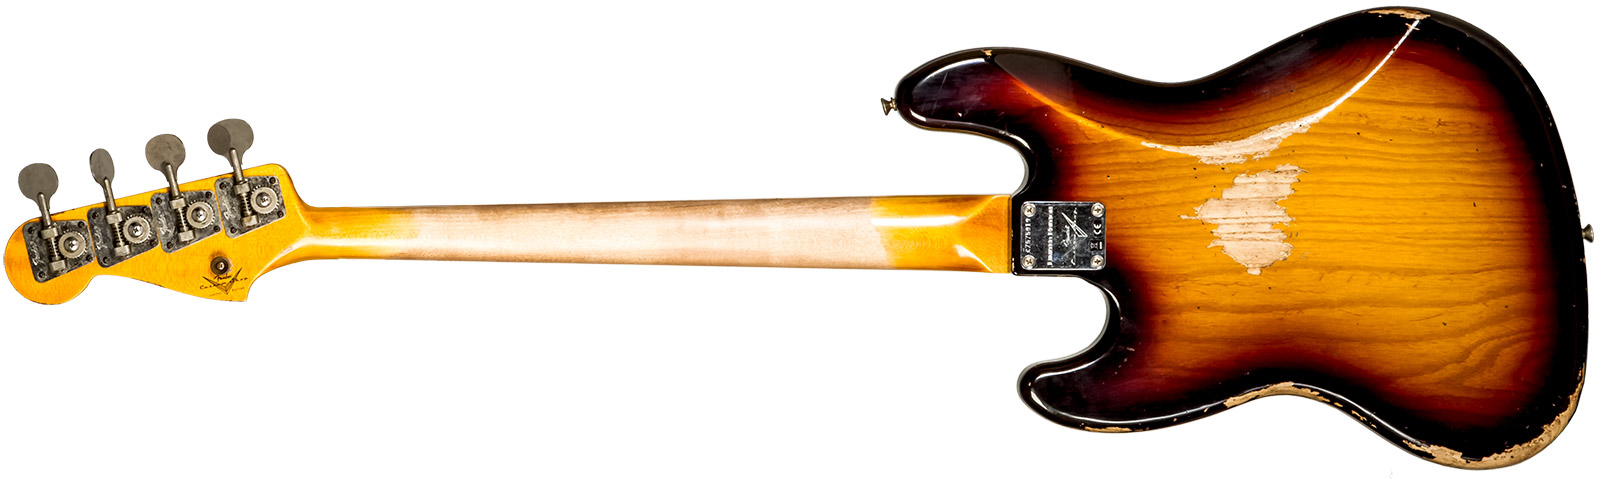 Fender Custom Shop Jazz Bass Custom Rw #cz575919 - Heavy Relic 3-color Sunburst - Basse Électrique Solid Body - Variation 2